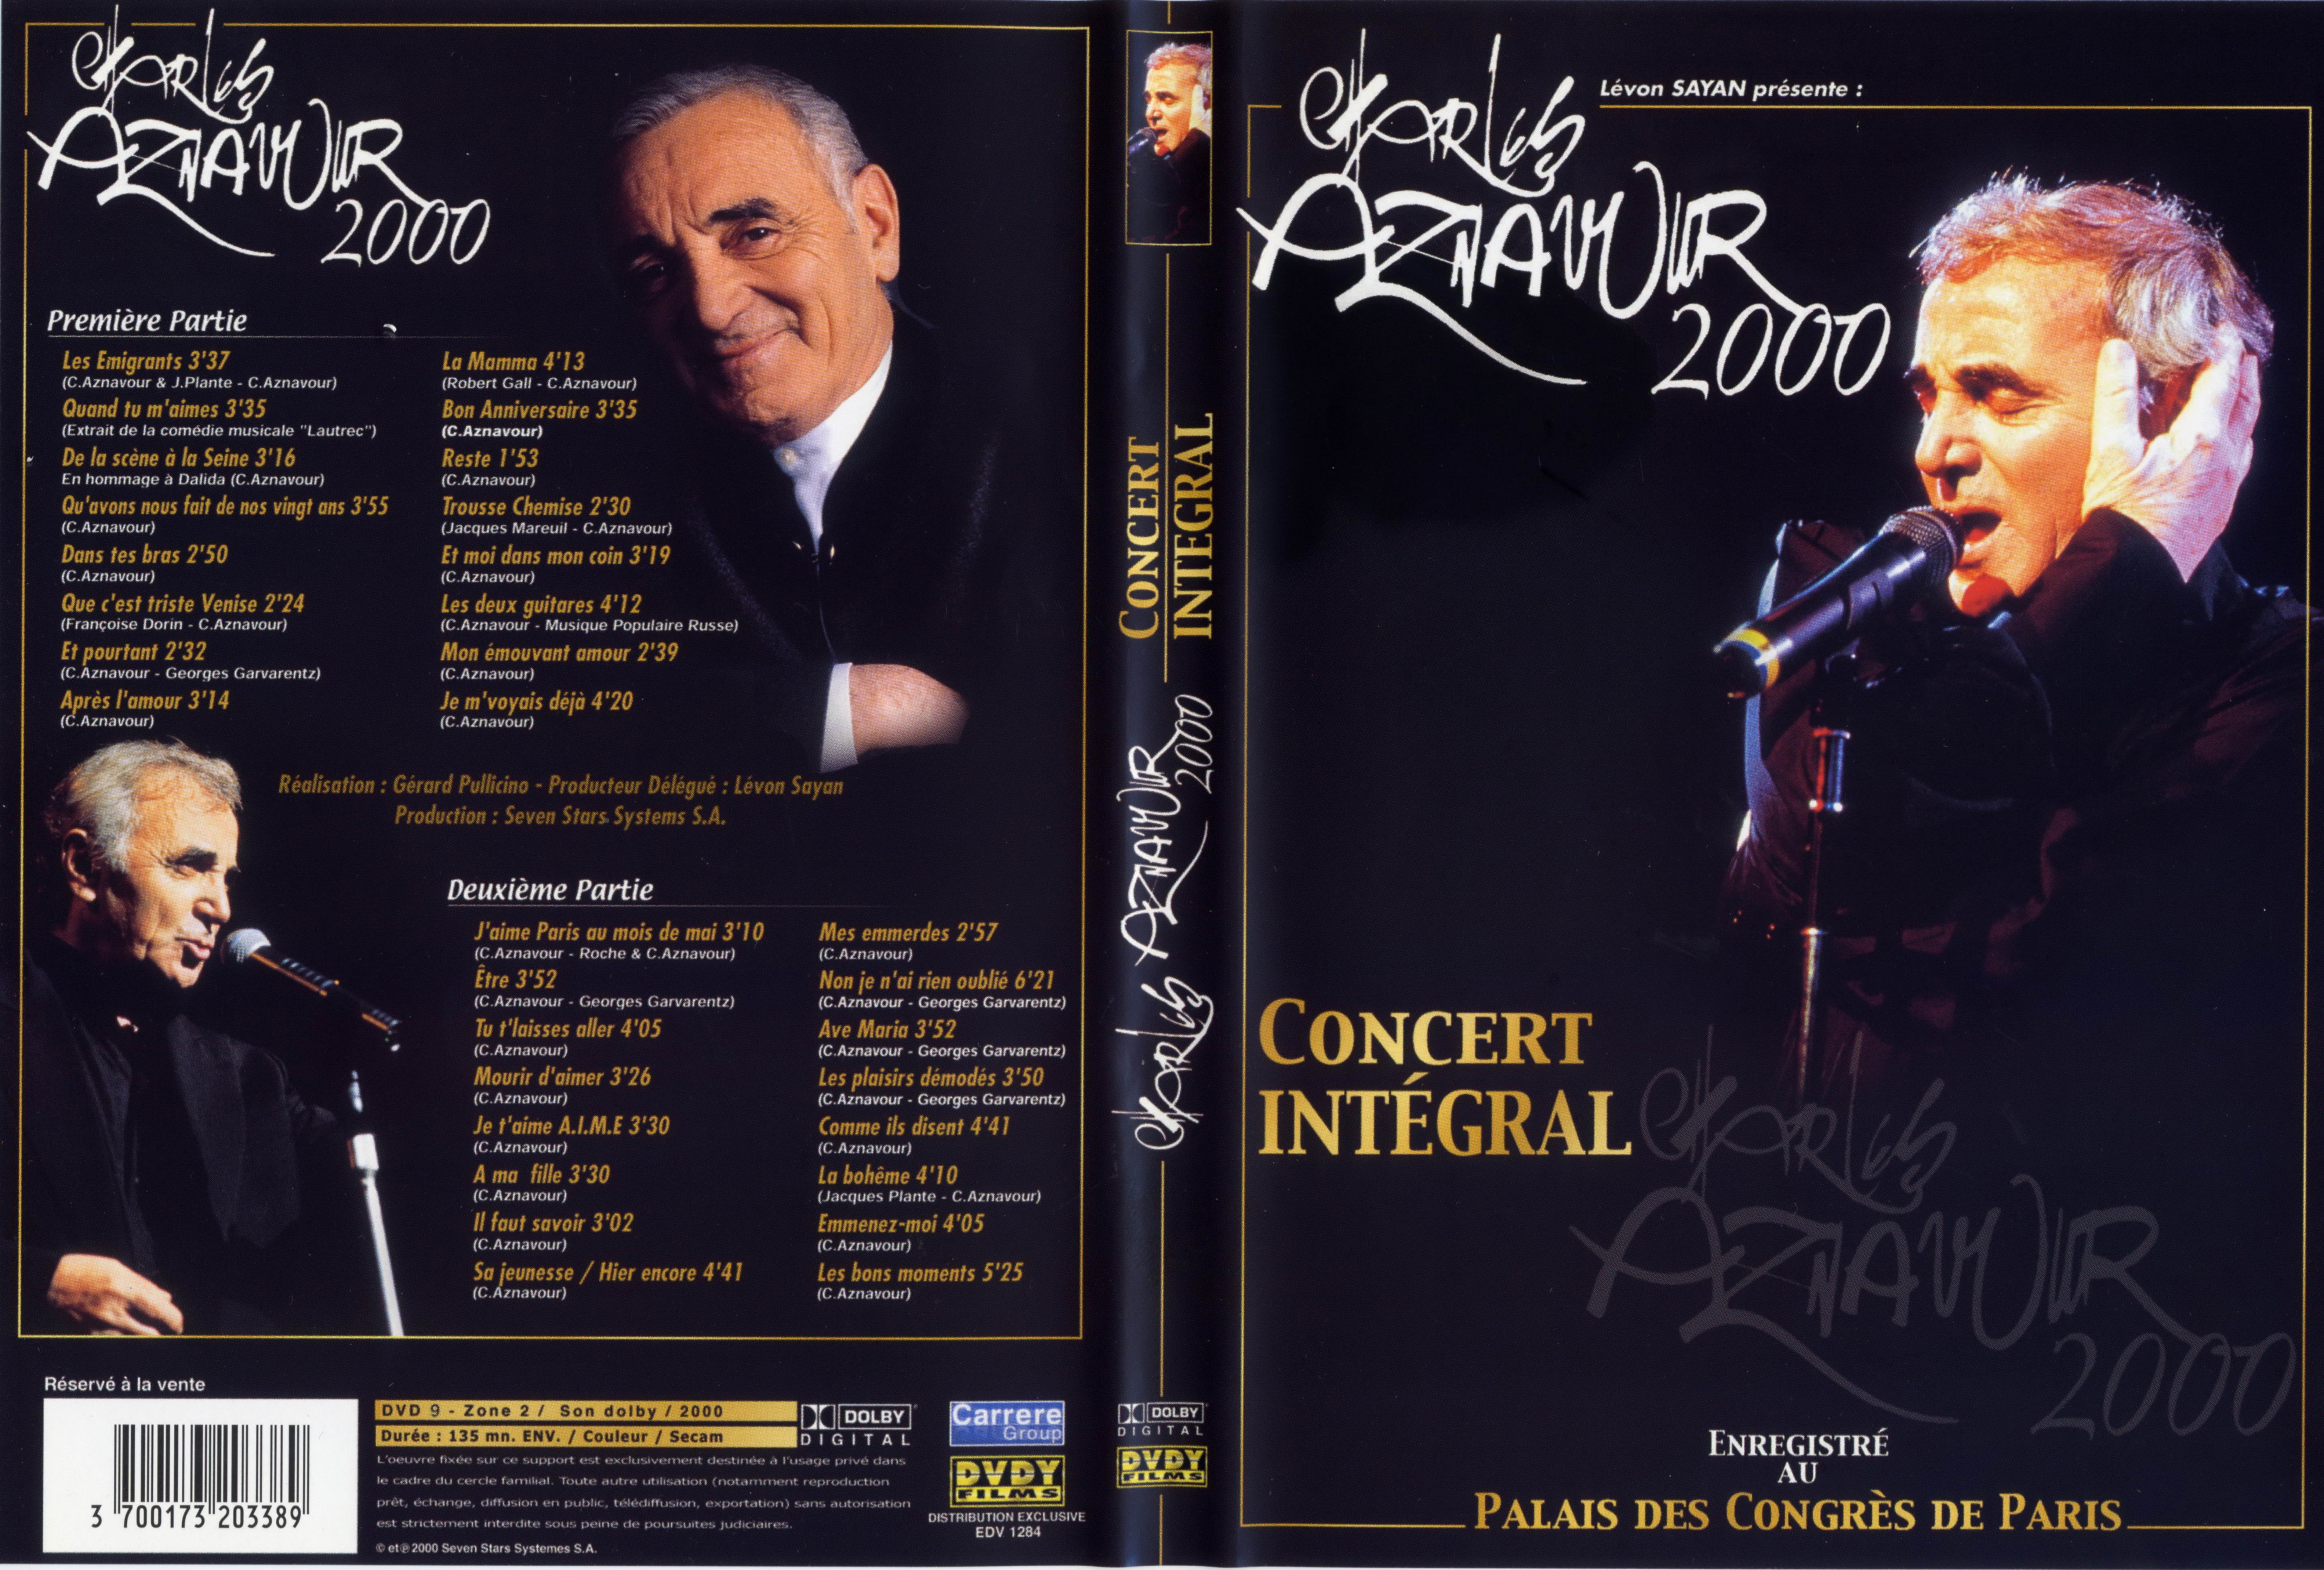 Jaquette DVD Charles Aznavour 2000 concert integrale